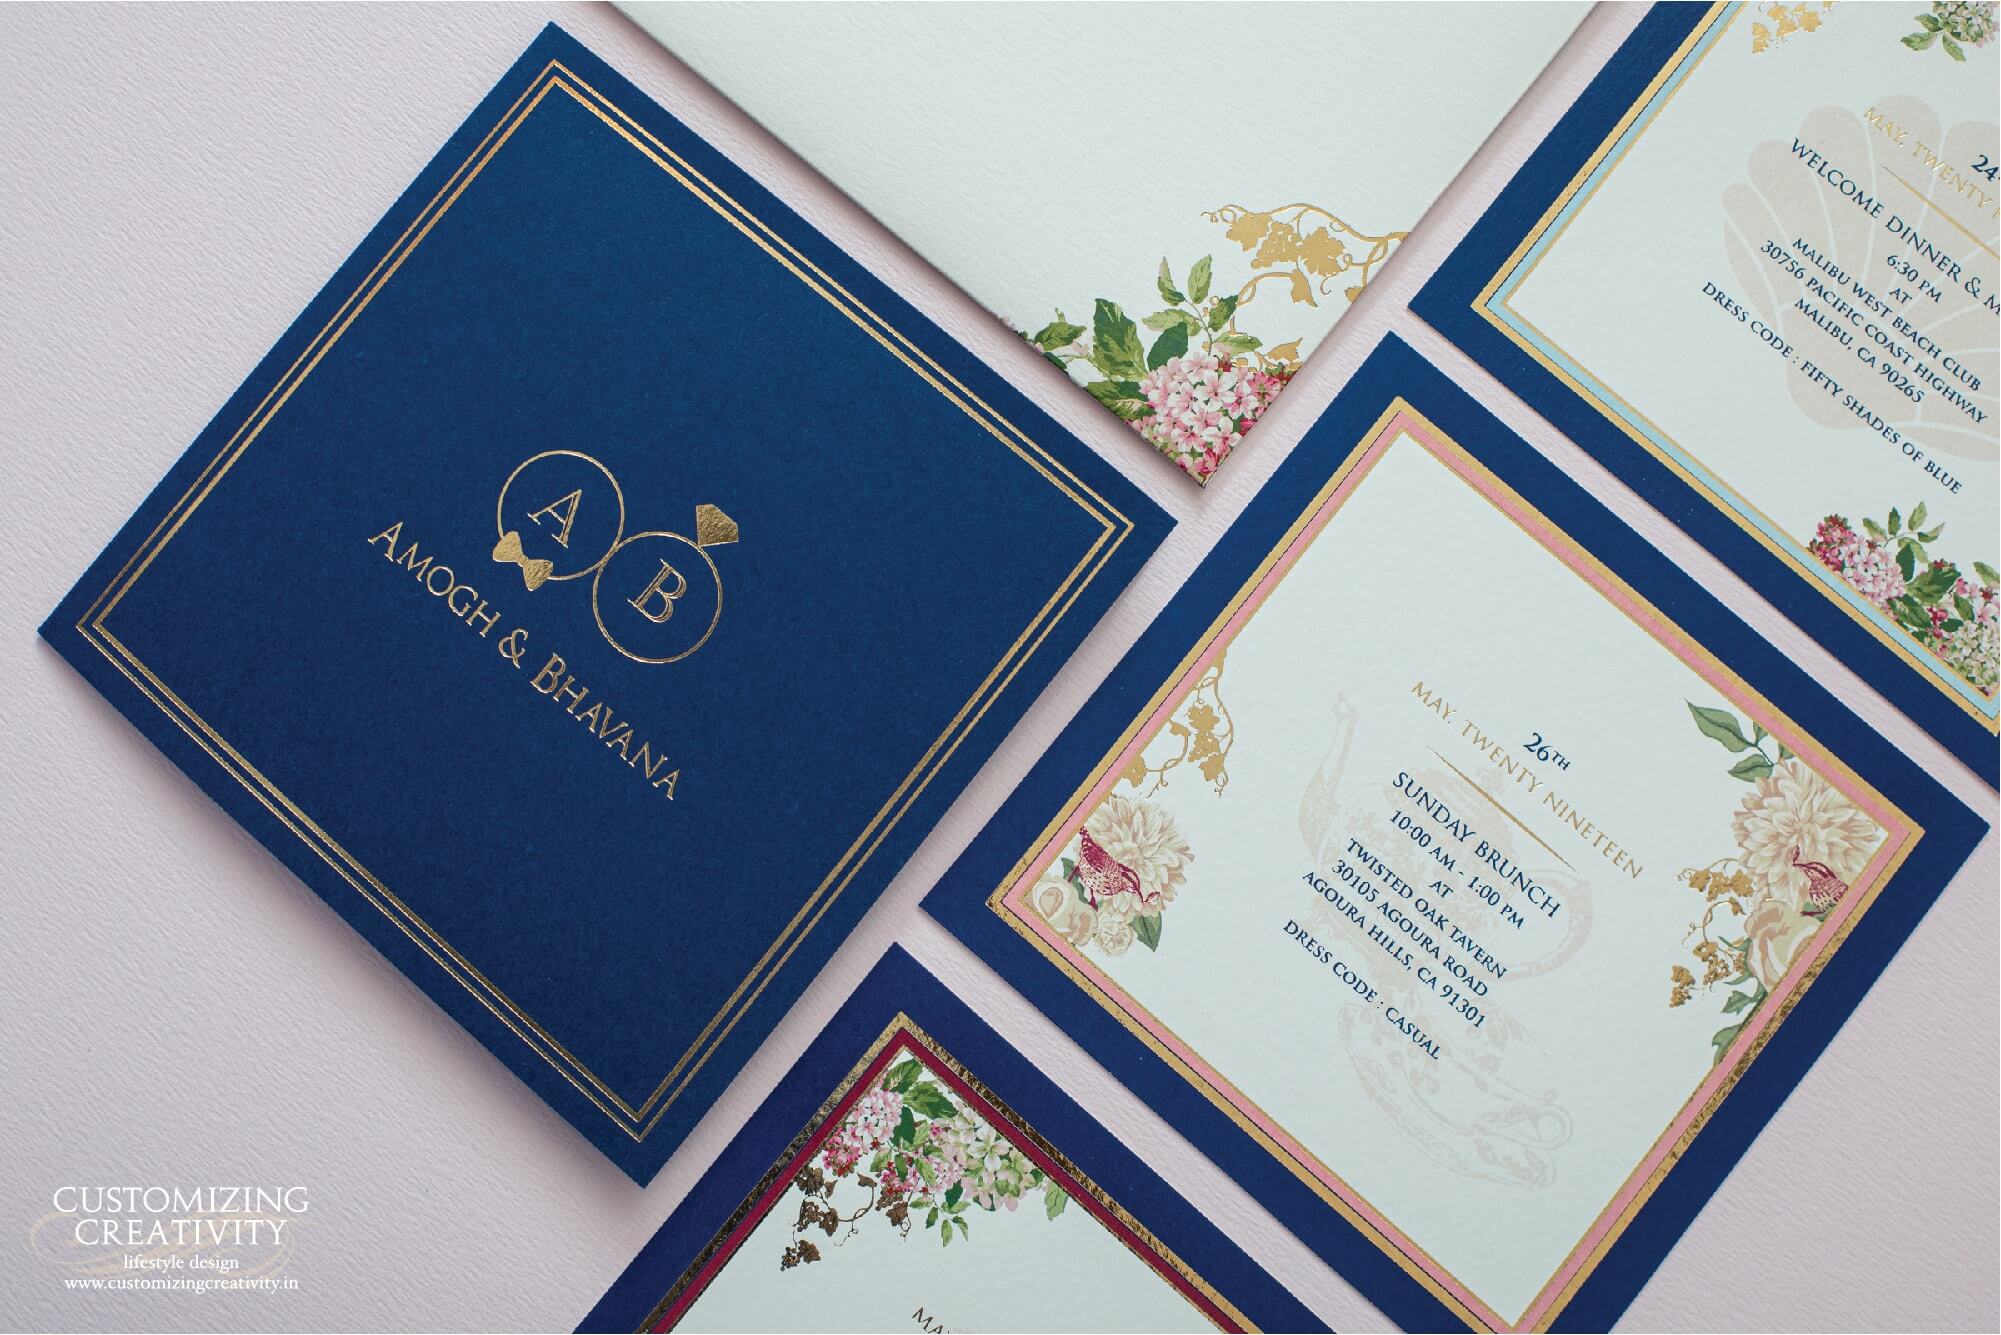 customized-cards-and-unique-wedding-invitations-customizing-creativity